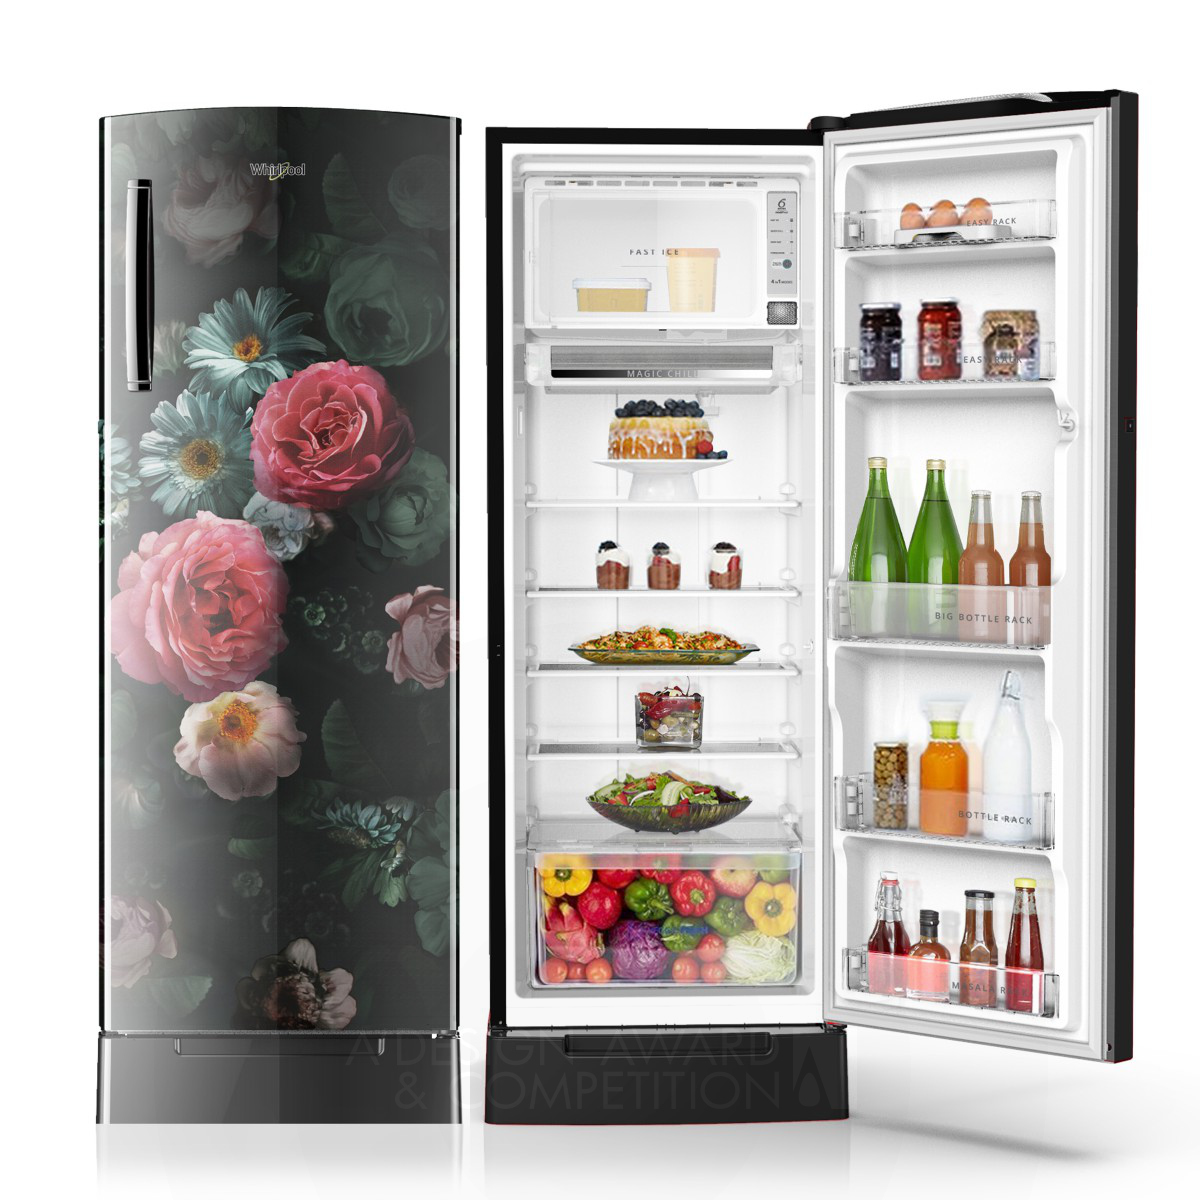 IceMagic Pro 2020 <b>Direct Cool Single Door Refrigerator